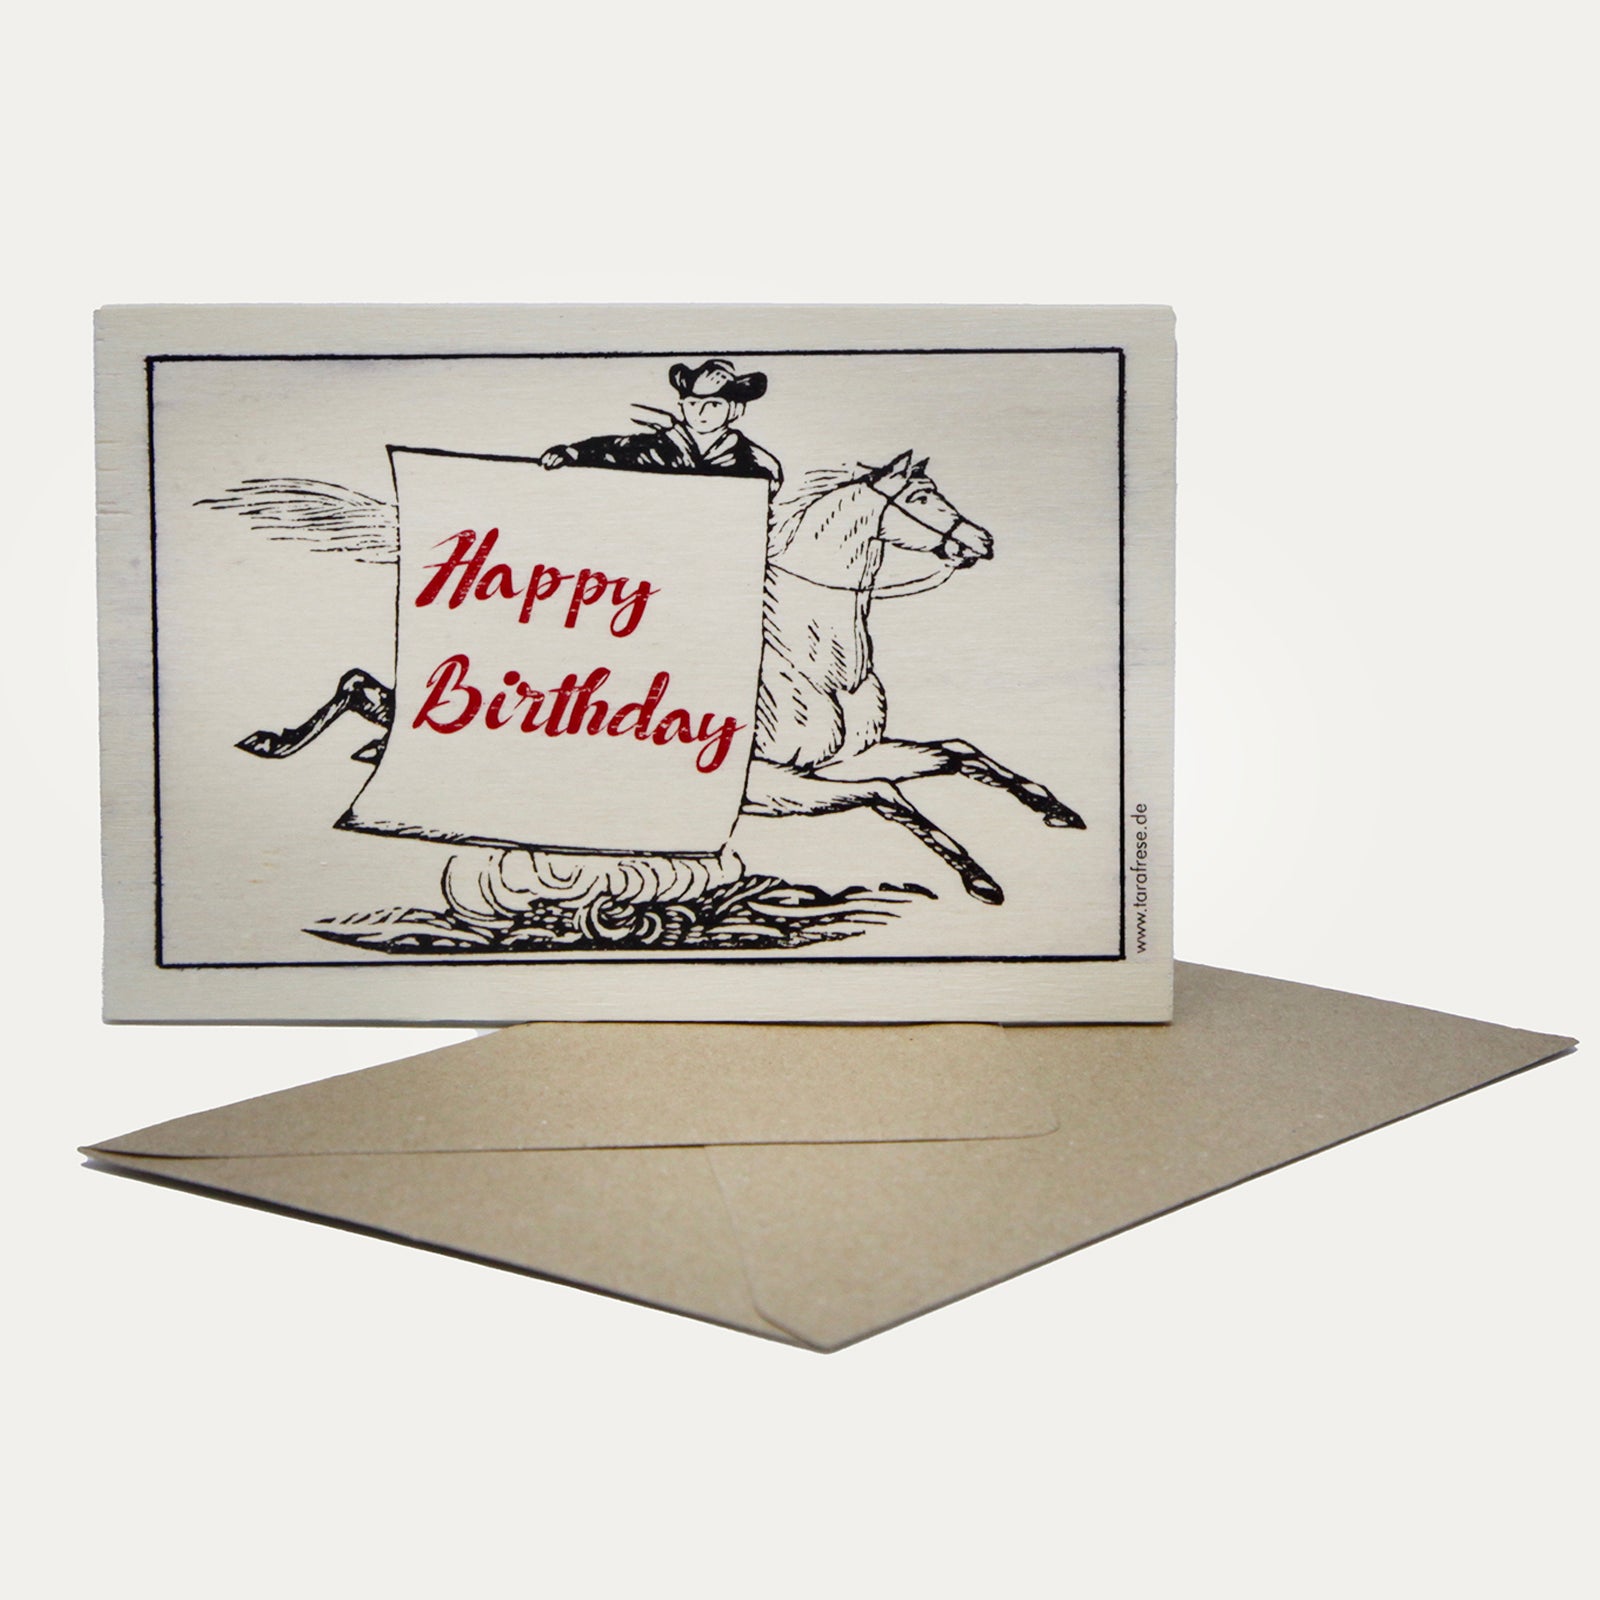 Happy Birthday Cowboy Holzpostkarte - Made in Bremen - Kartenmanufaktur Tara Frese - 